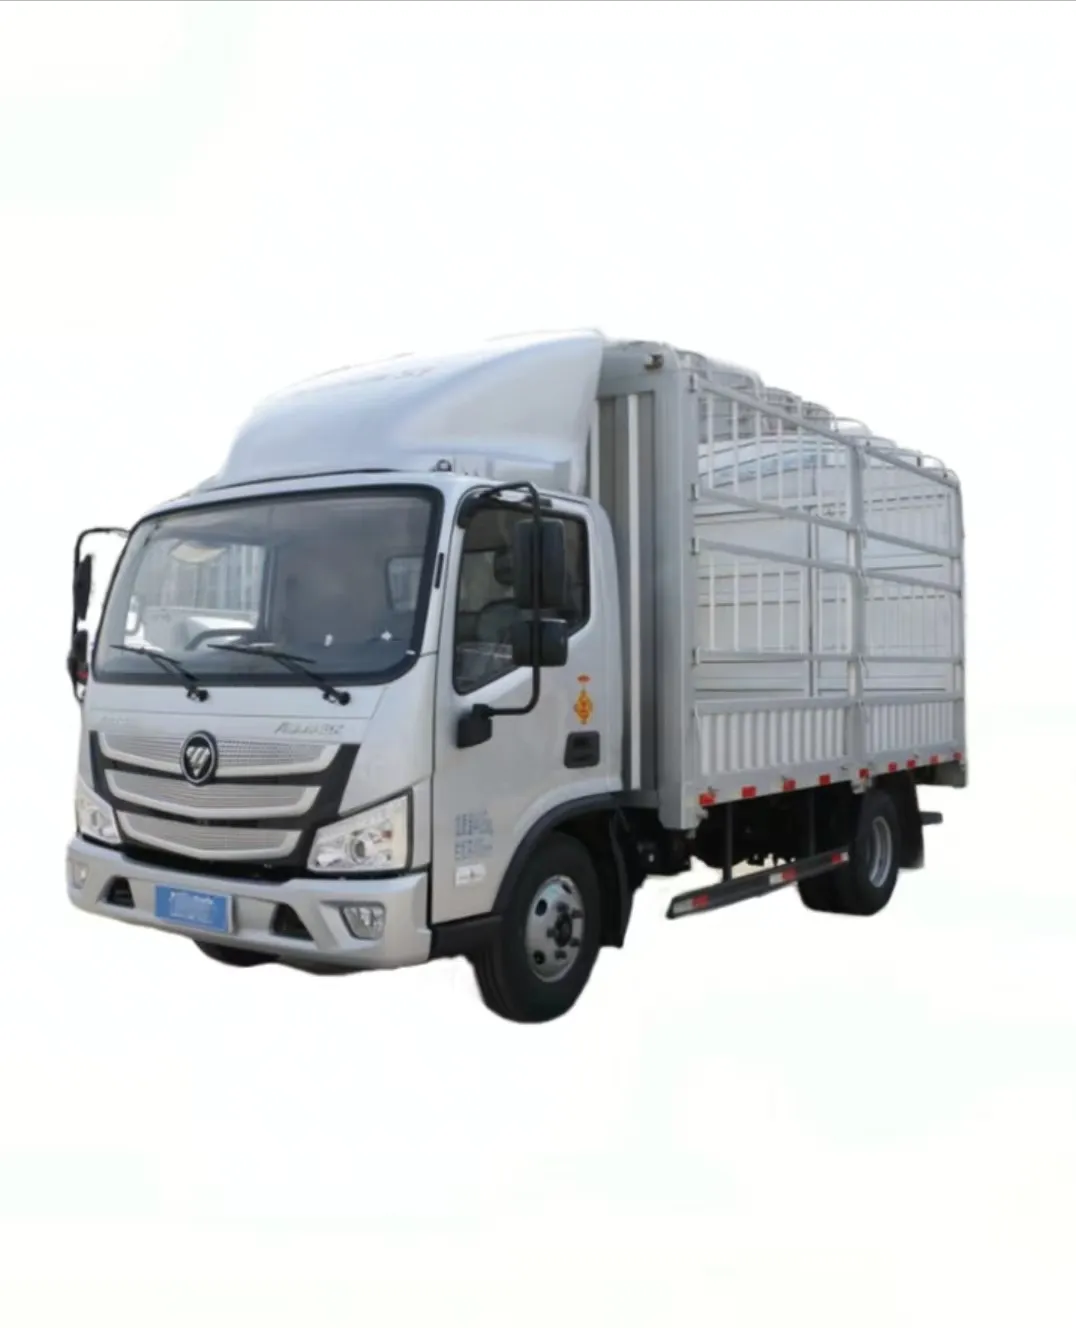 Foton Oumarフェンストラック18トン家畜輸送トラックフェンス貨物トラック